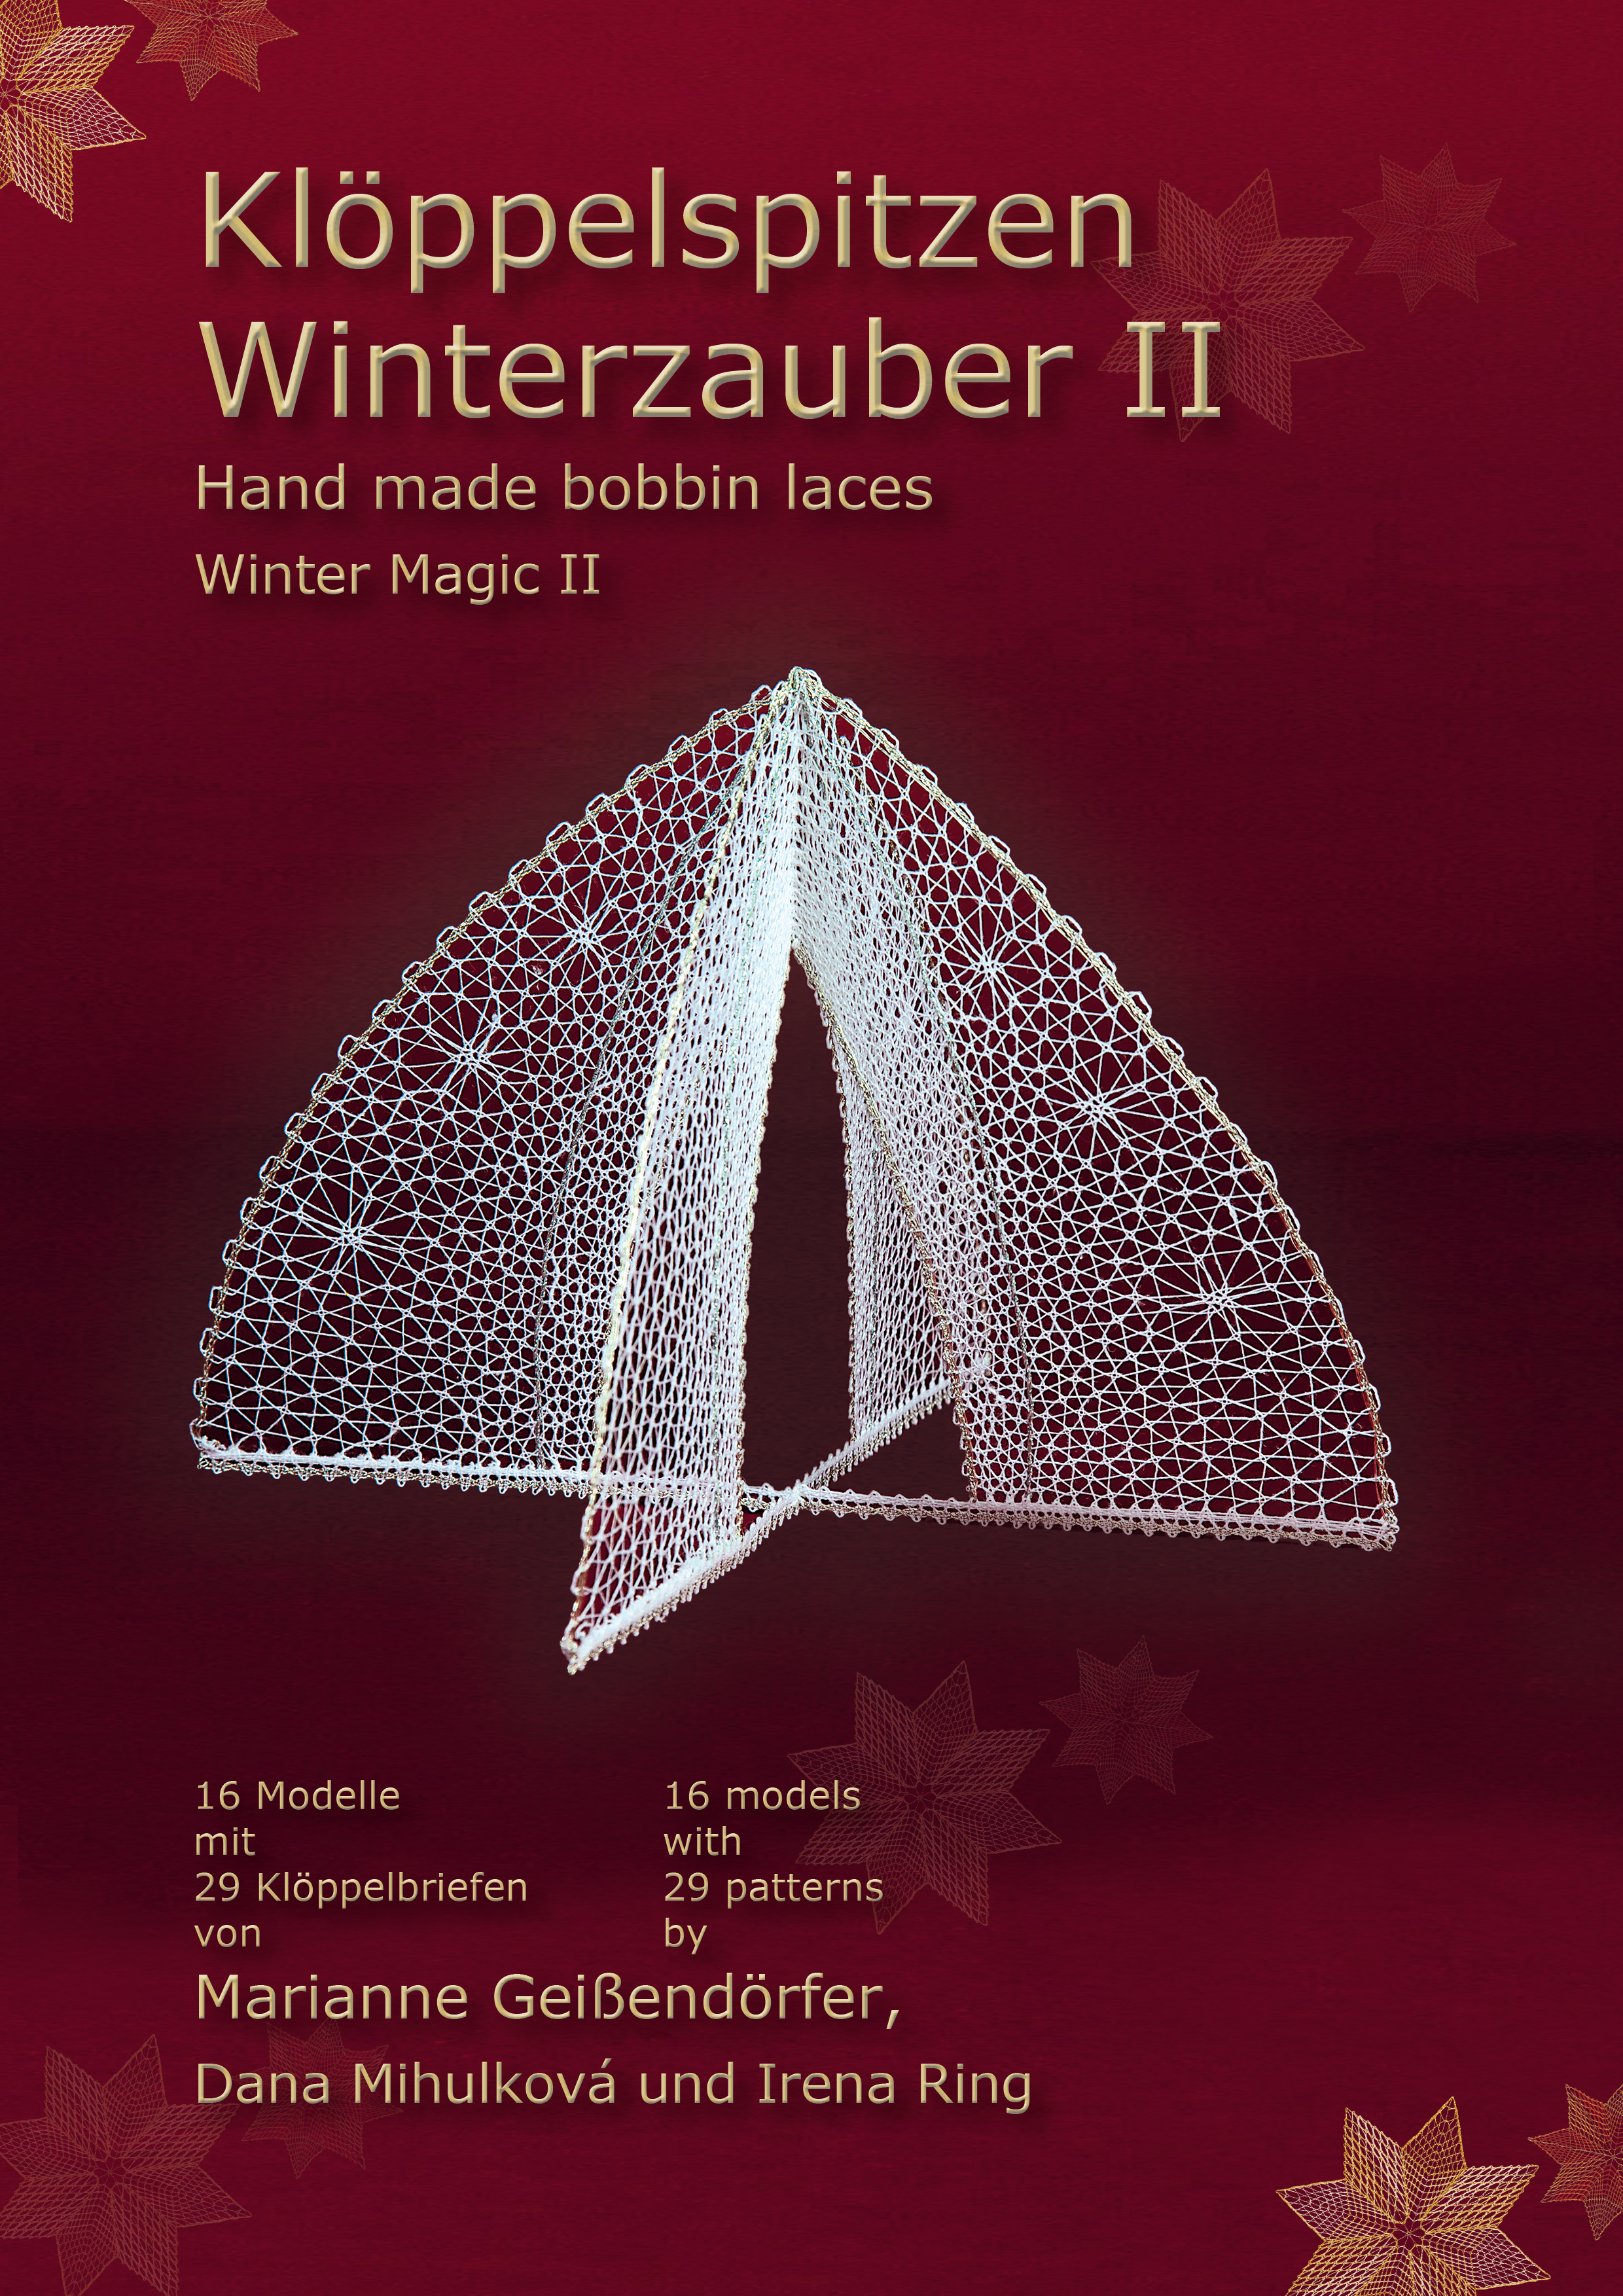 Winter Magic II by Marianne Geissendoerfer